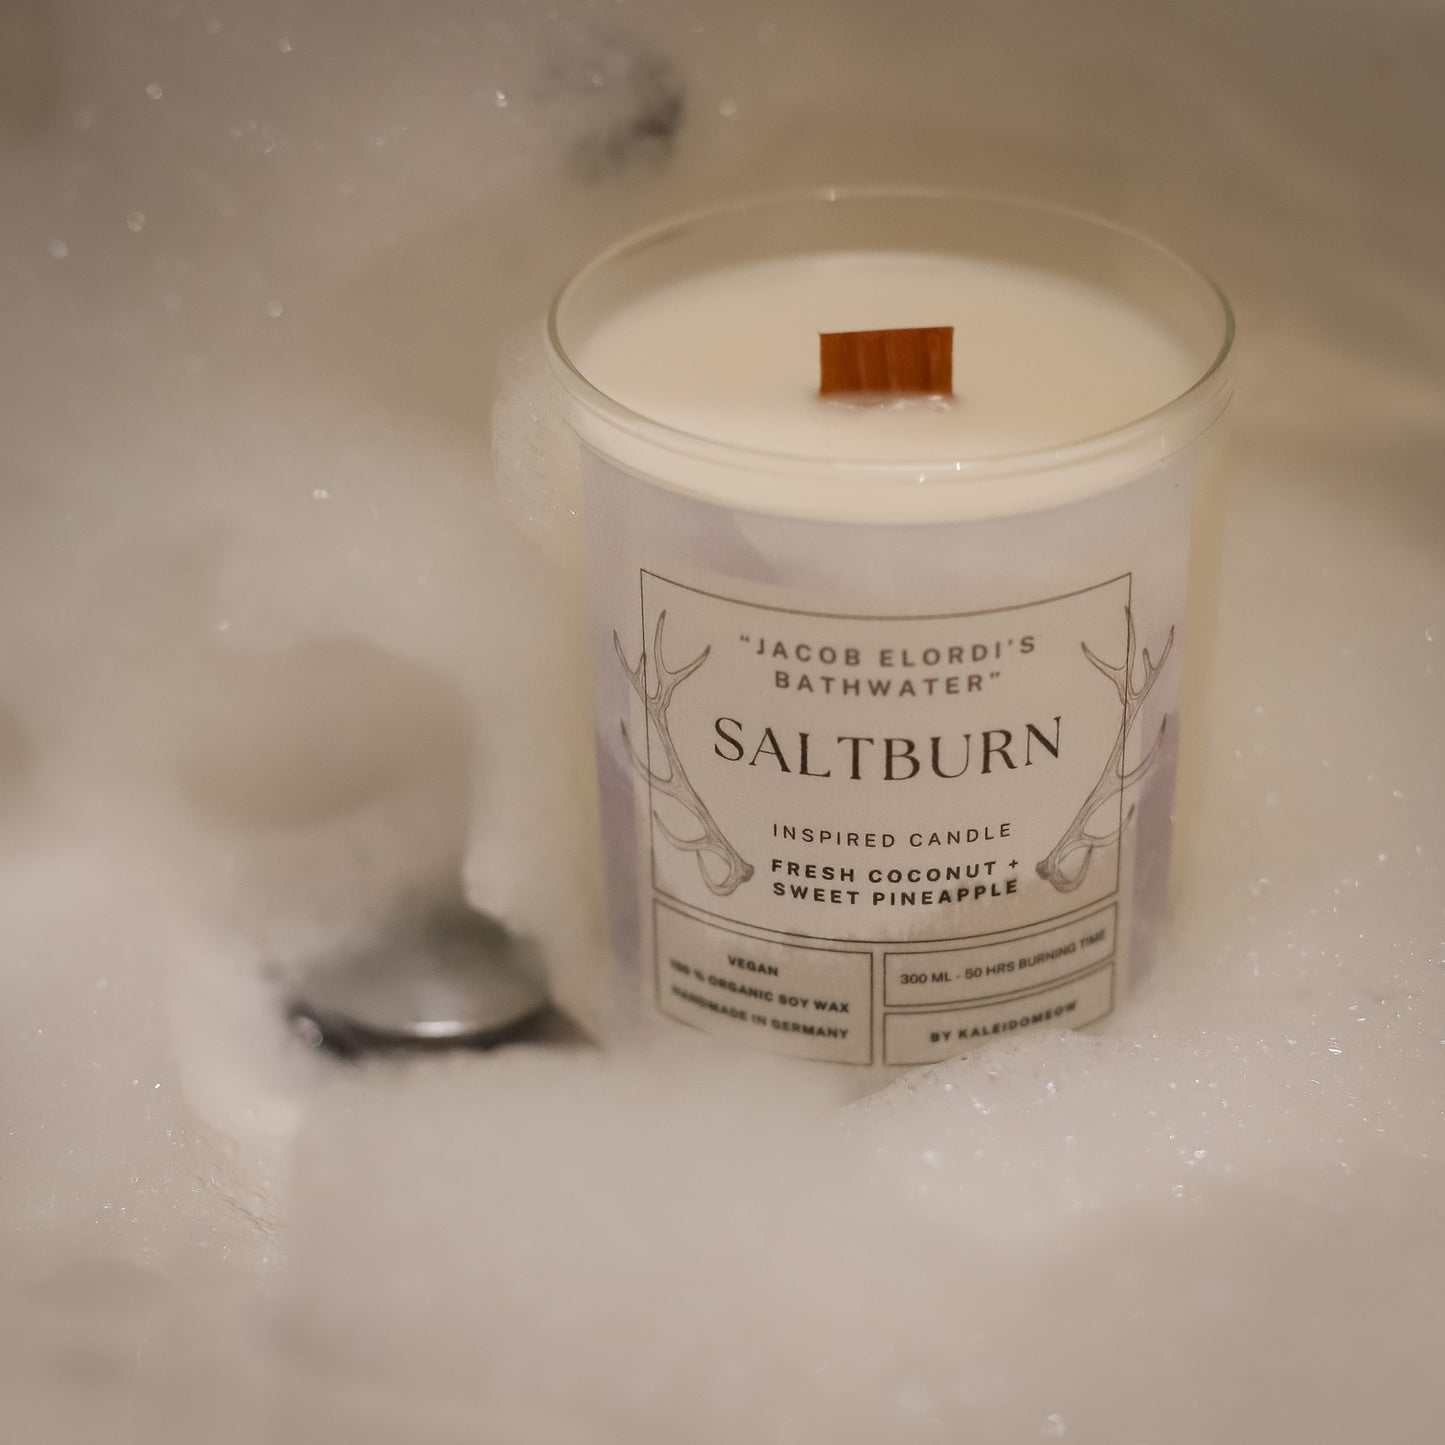 SALTBURN inspired soy candle - 'Jacob Elordi's Bathwater' 300 ML